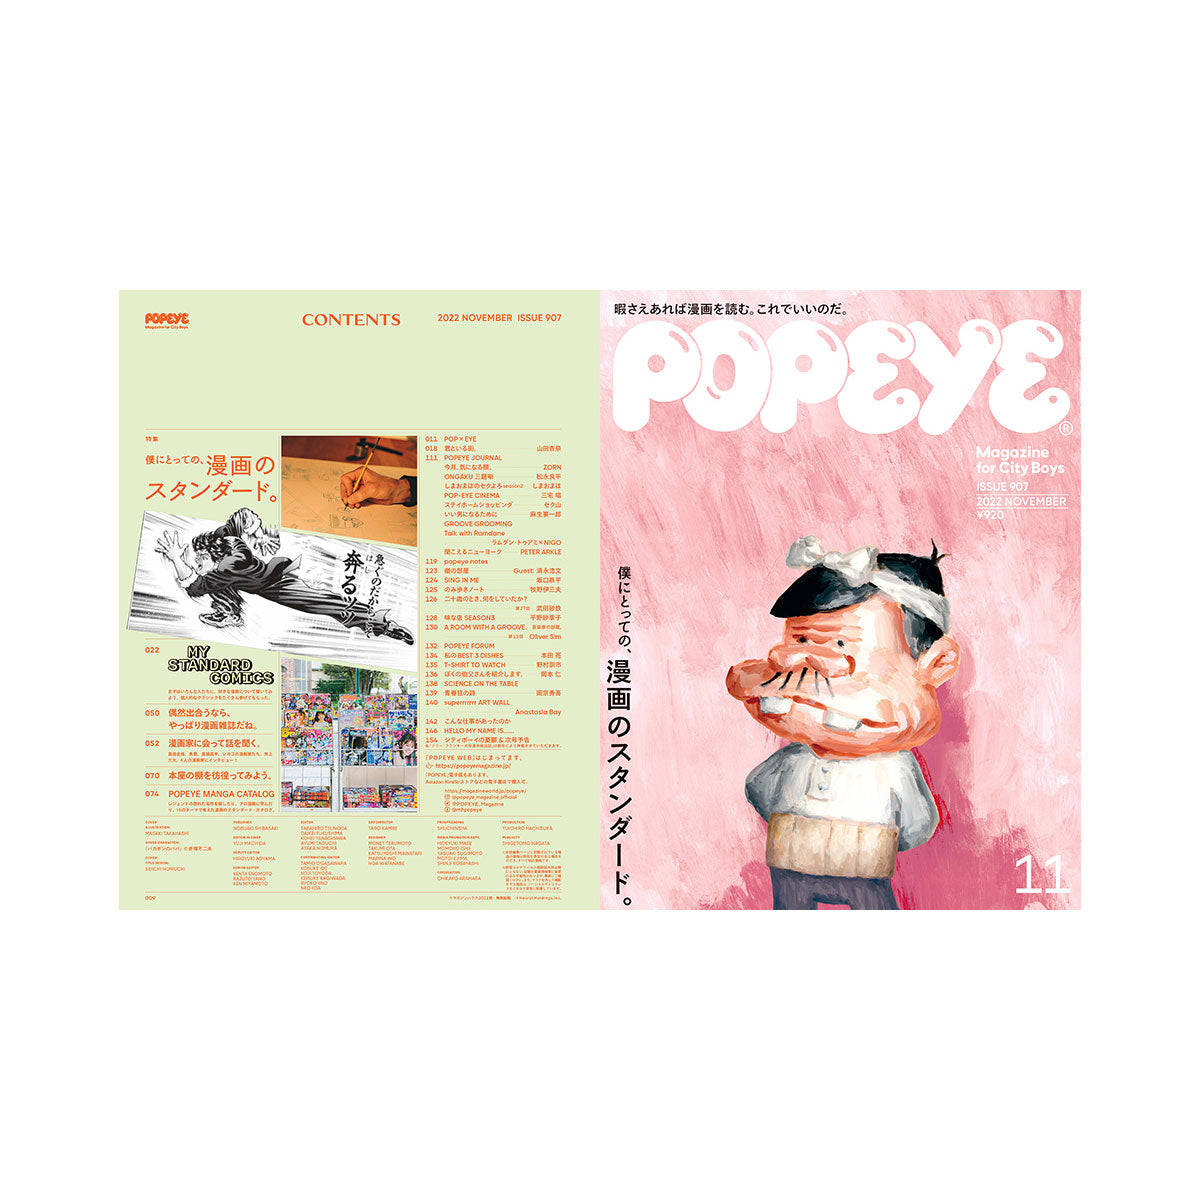 popeye magazine issue 907 popeynov22c1 - a.plus